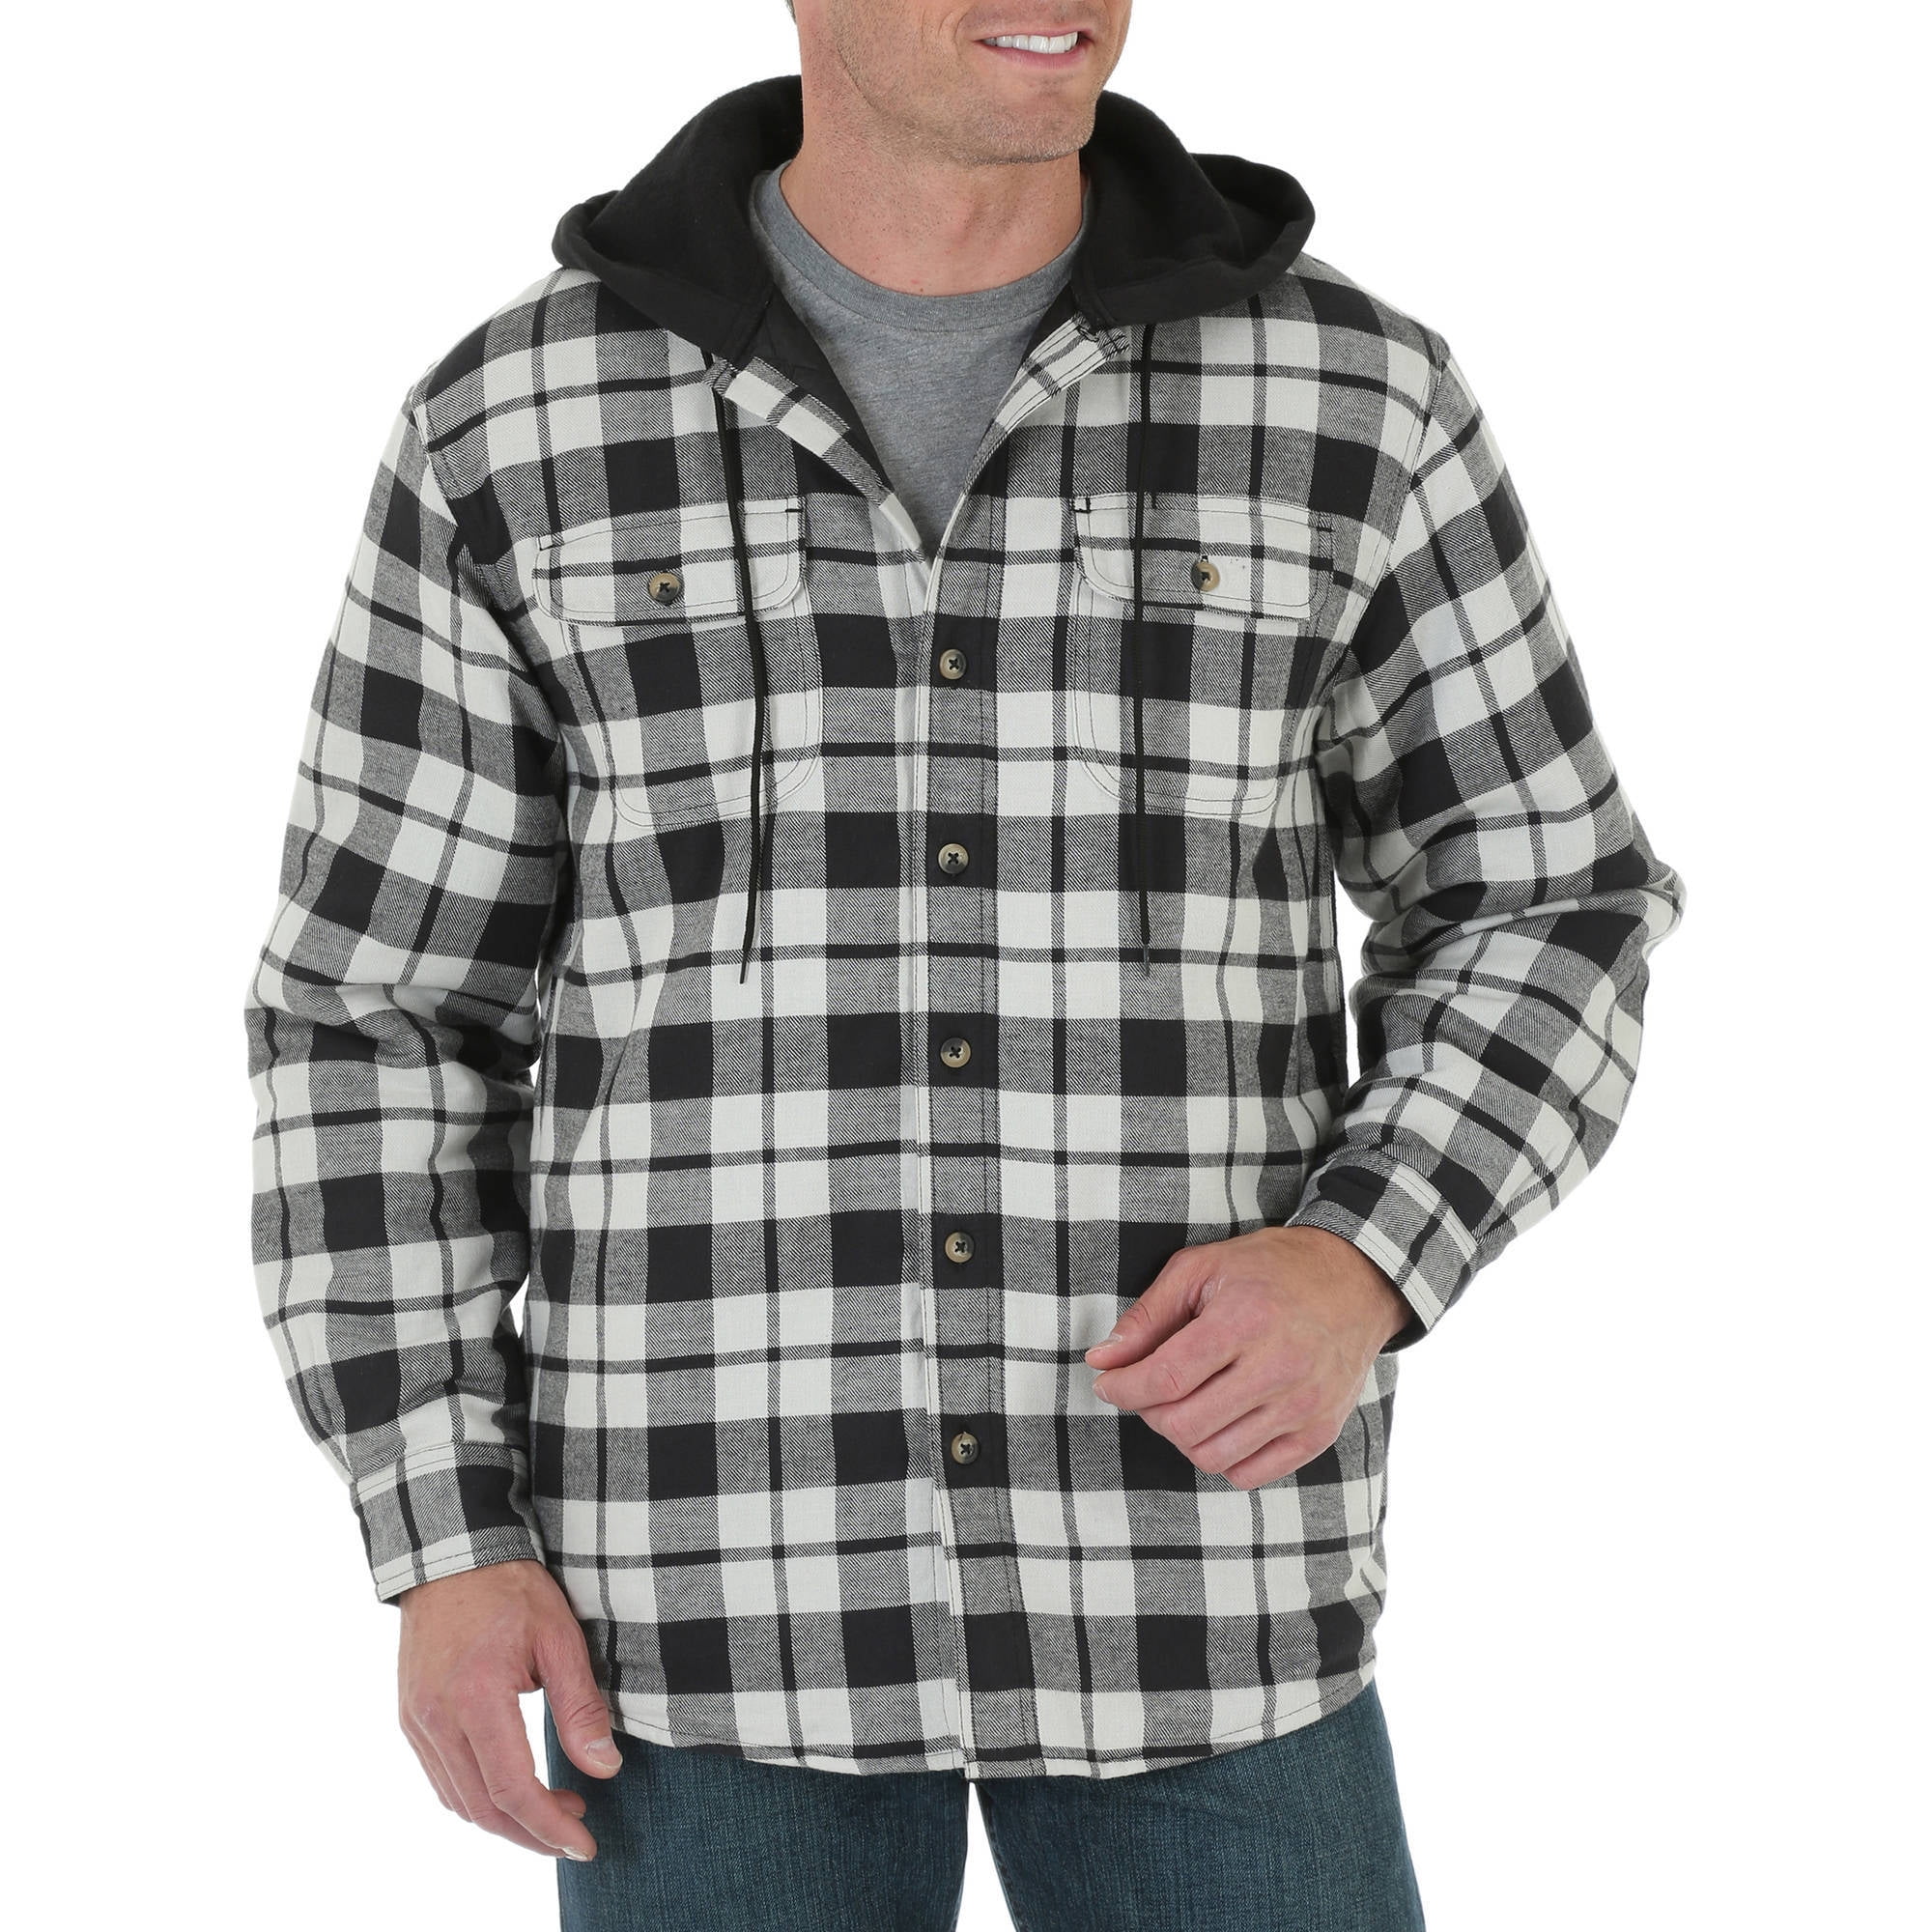 Men's Long Sleeve Shirt Jacket - Walmart.com